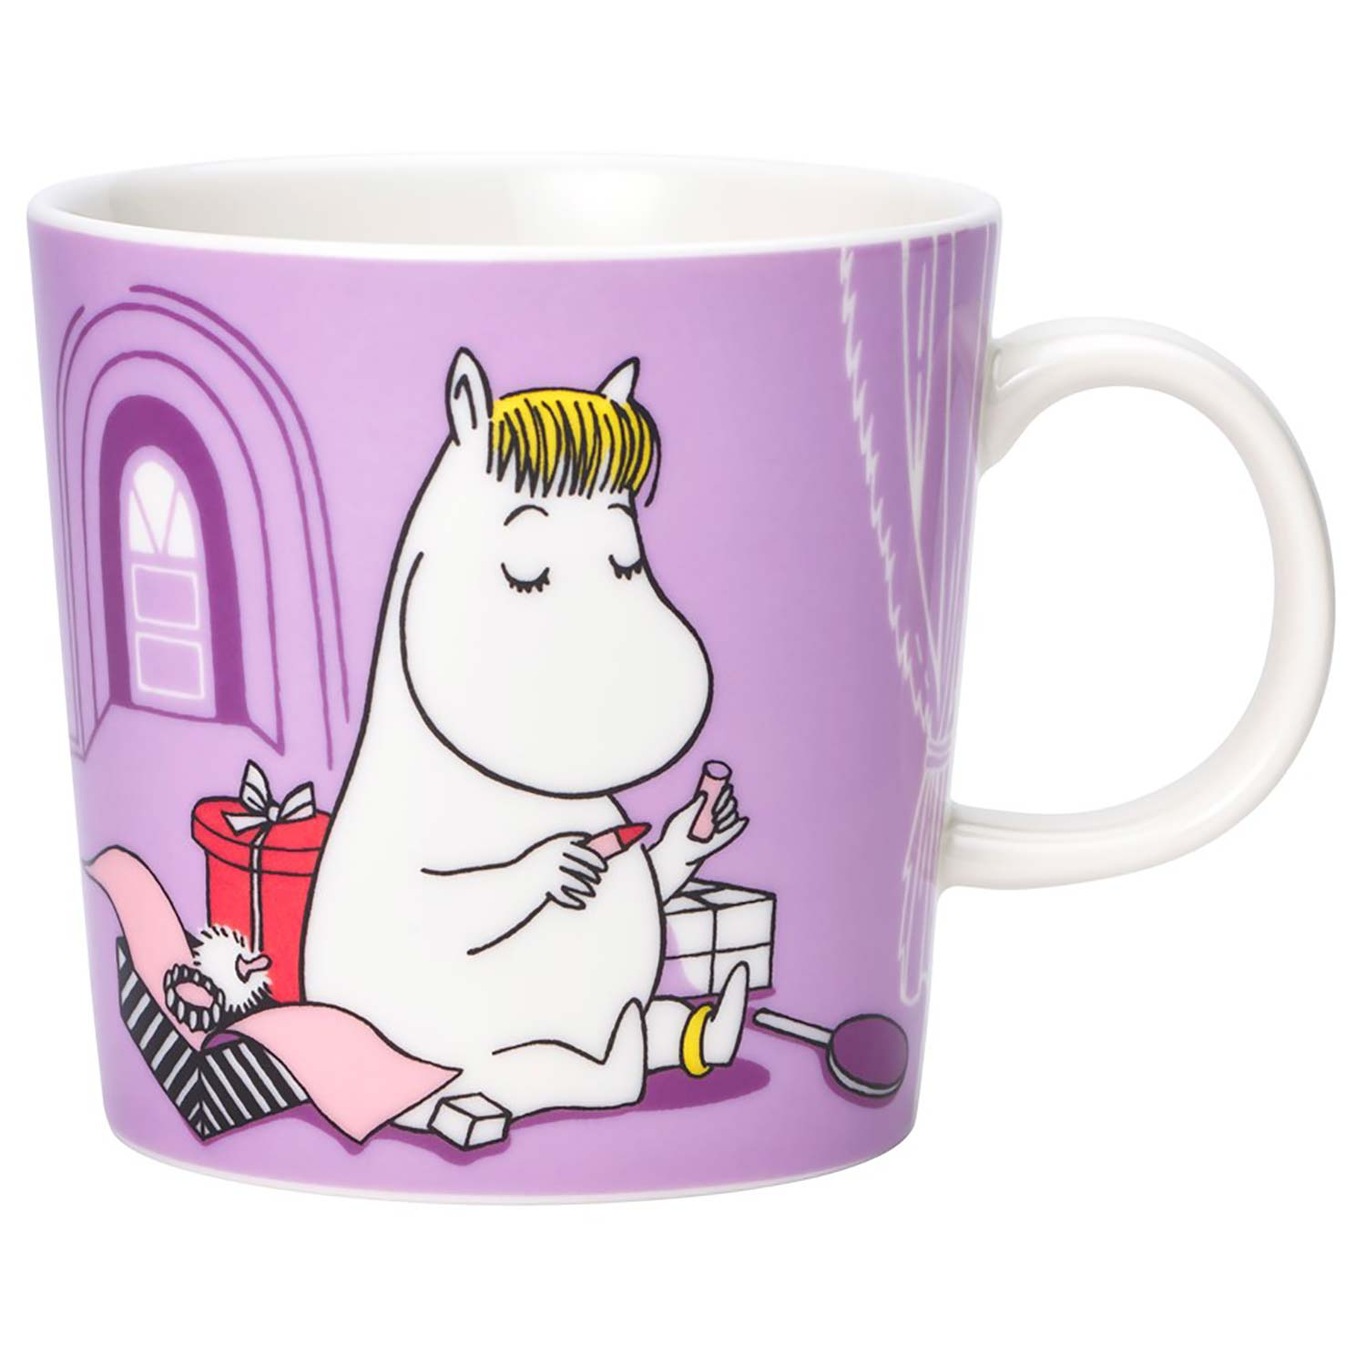 Moomin Mug 30 cl, Snorkmaiden Purple